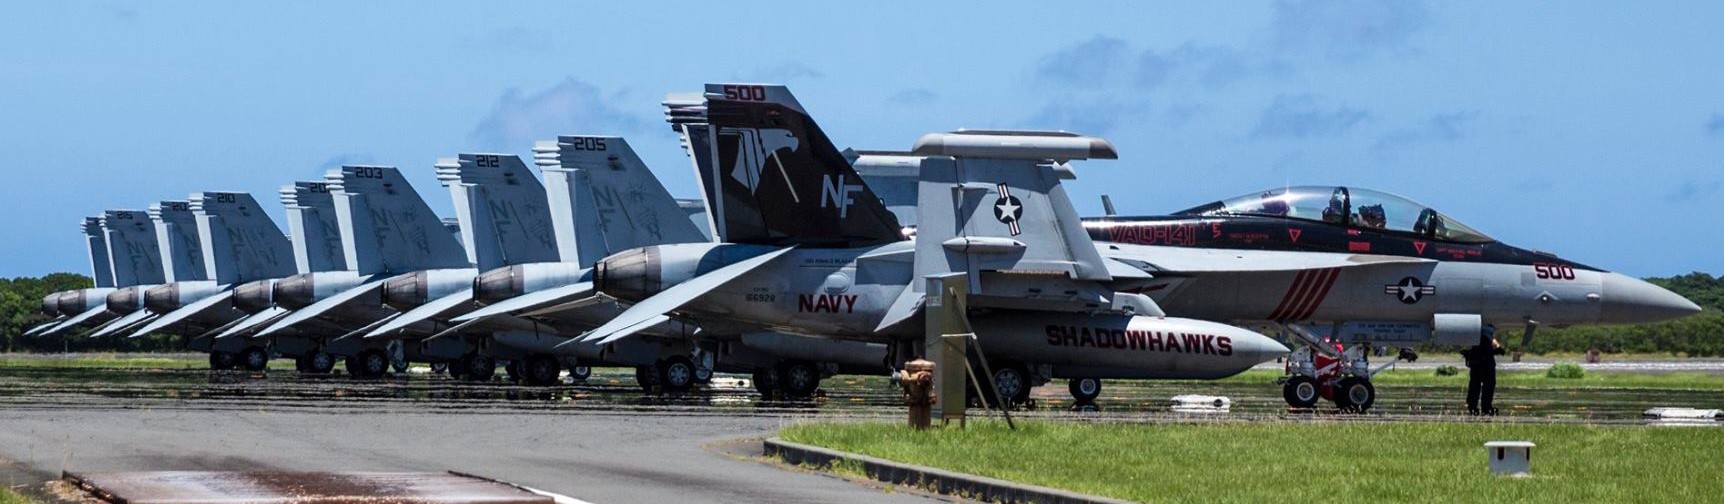 vaq-141 shadowhawks electronic attack squadron boeing ea-18g growler us navy cvw-5 uss ronald reagan cvn-76 60